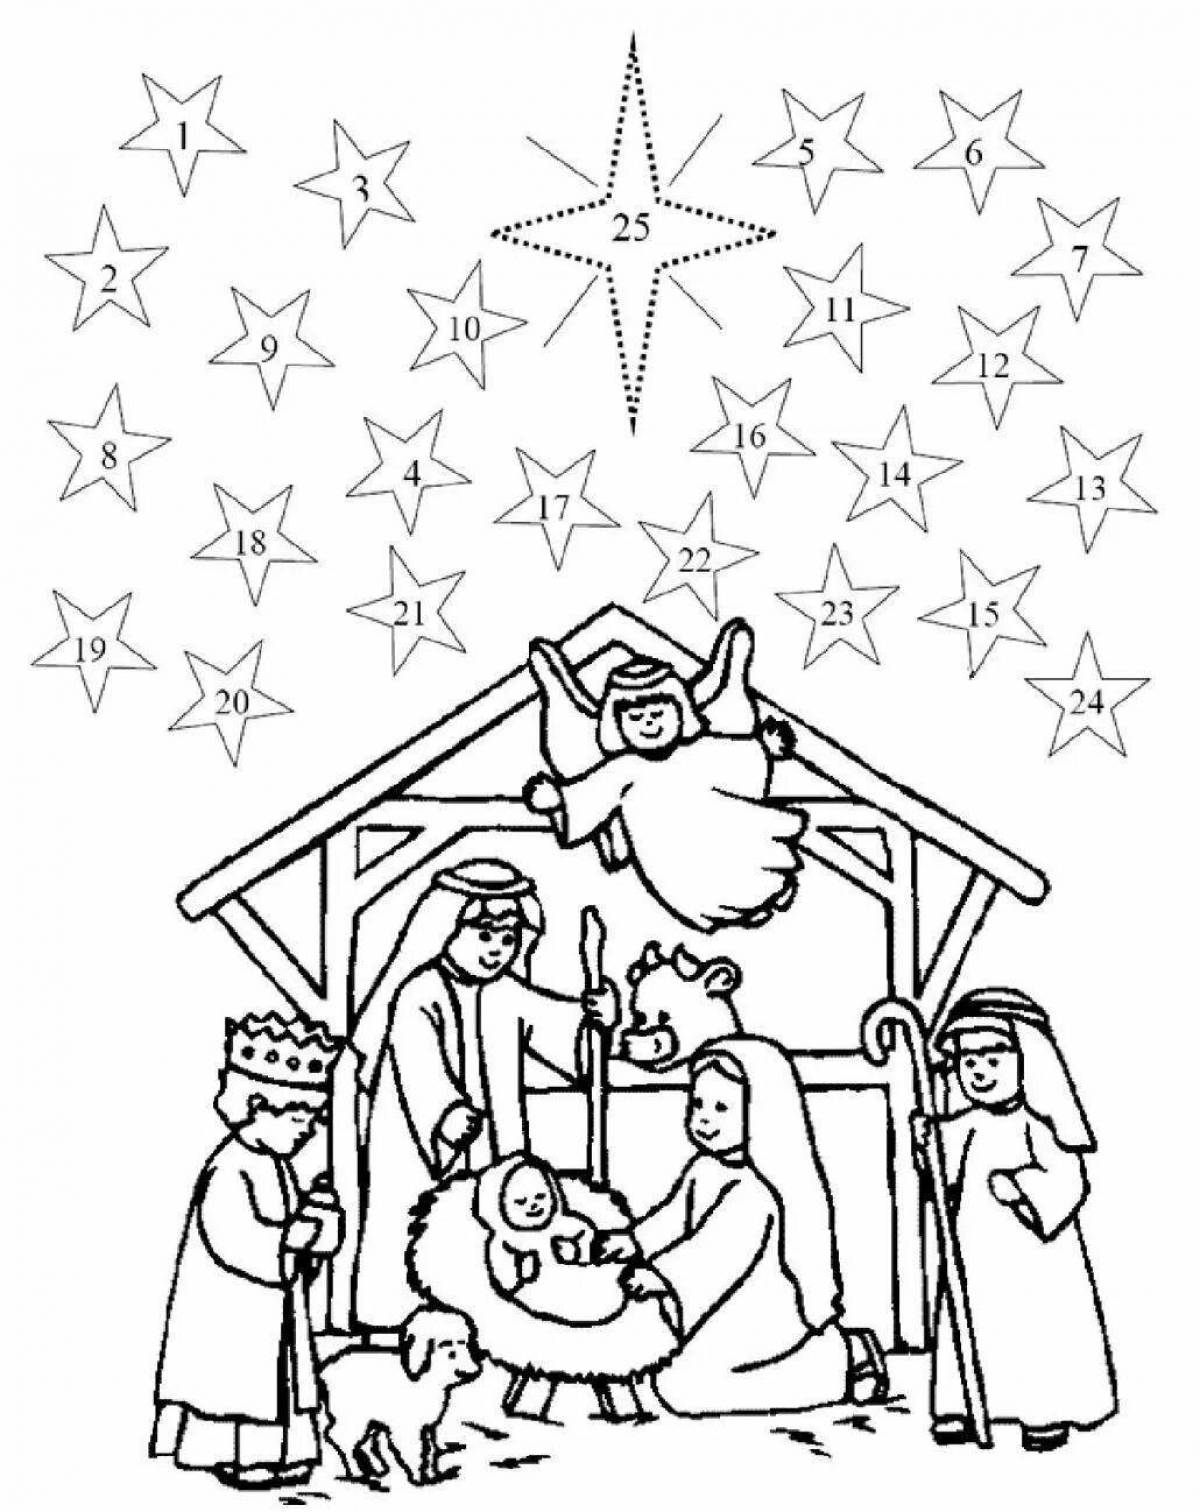 Star of Bethlehem coloring book for kids